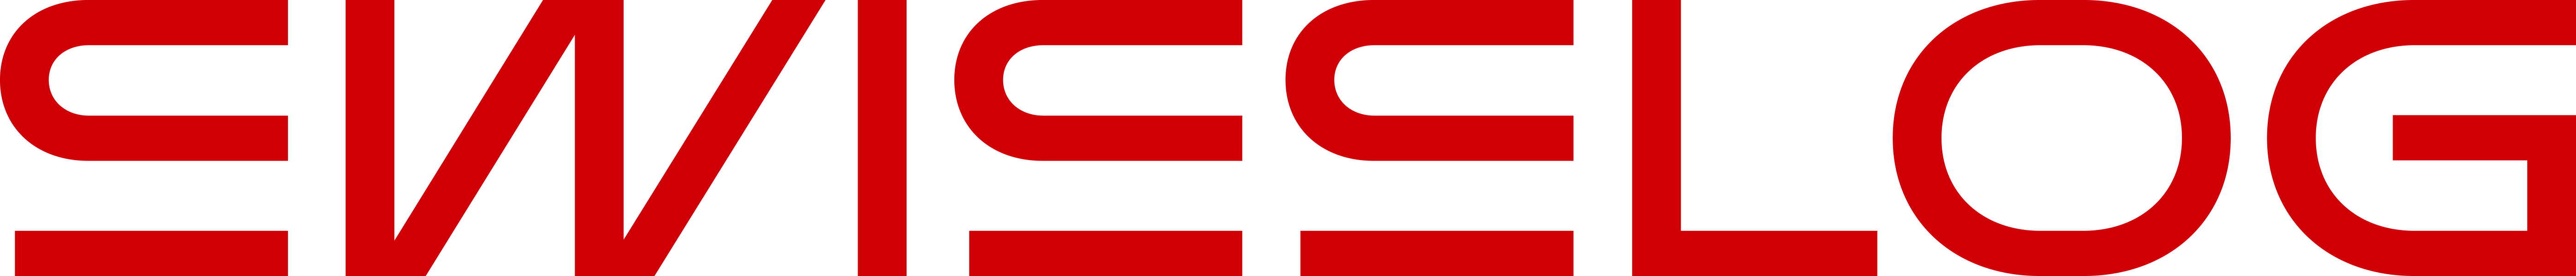 Swisslog logo